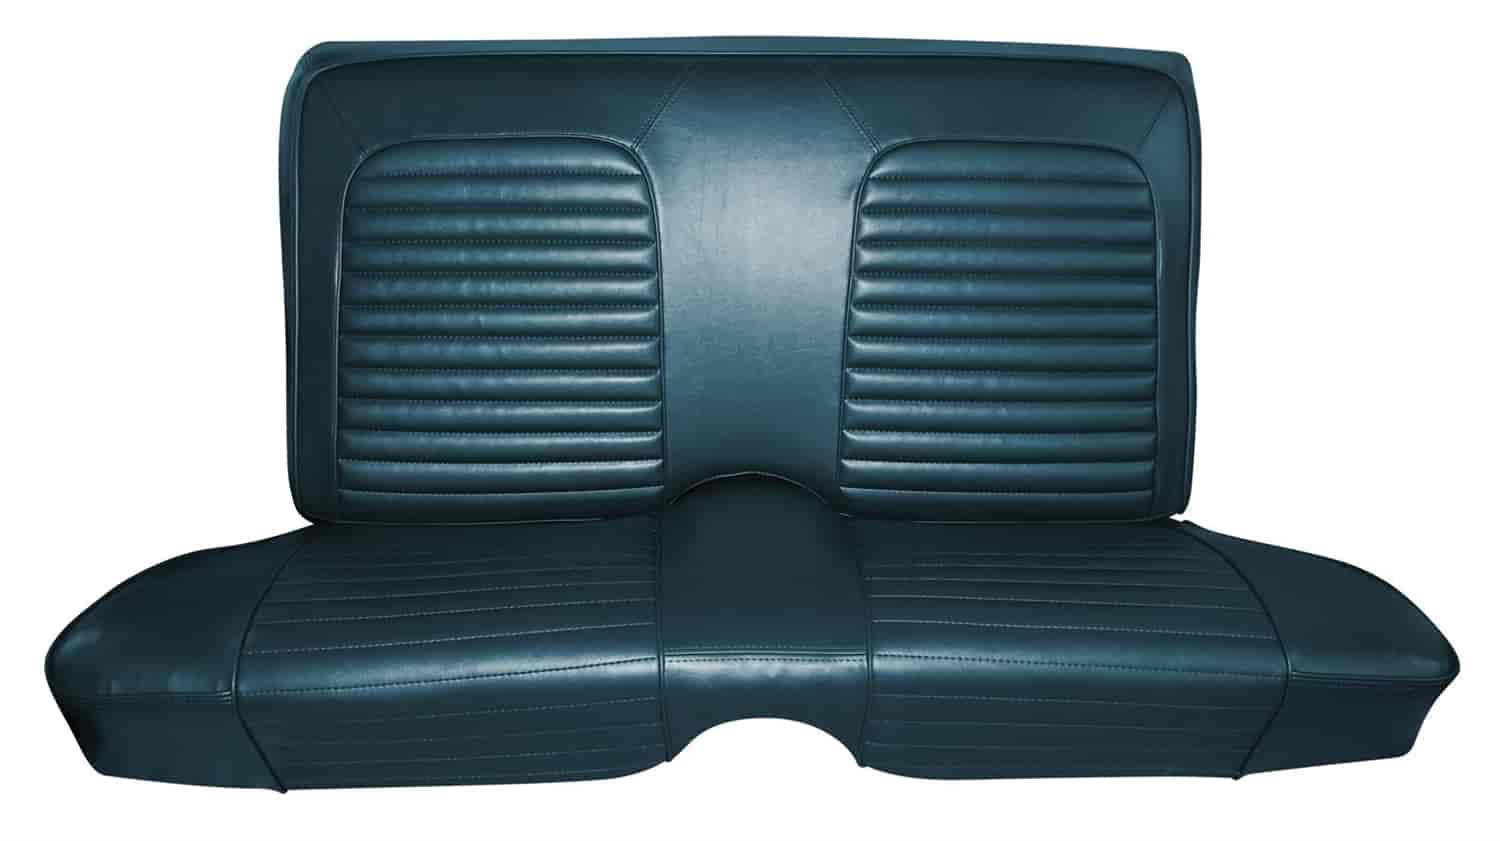 1965 Ford Falcon Futura 2-Door Hardtop Interior Rear Bench Seat Upholstery Set